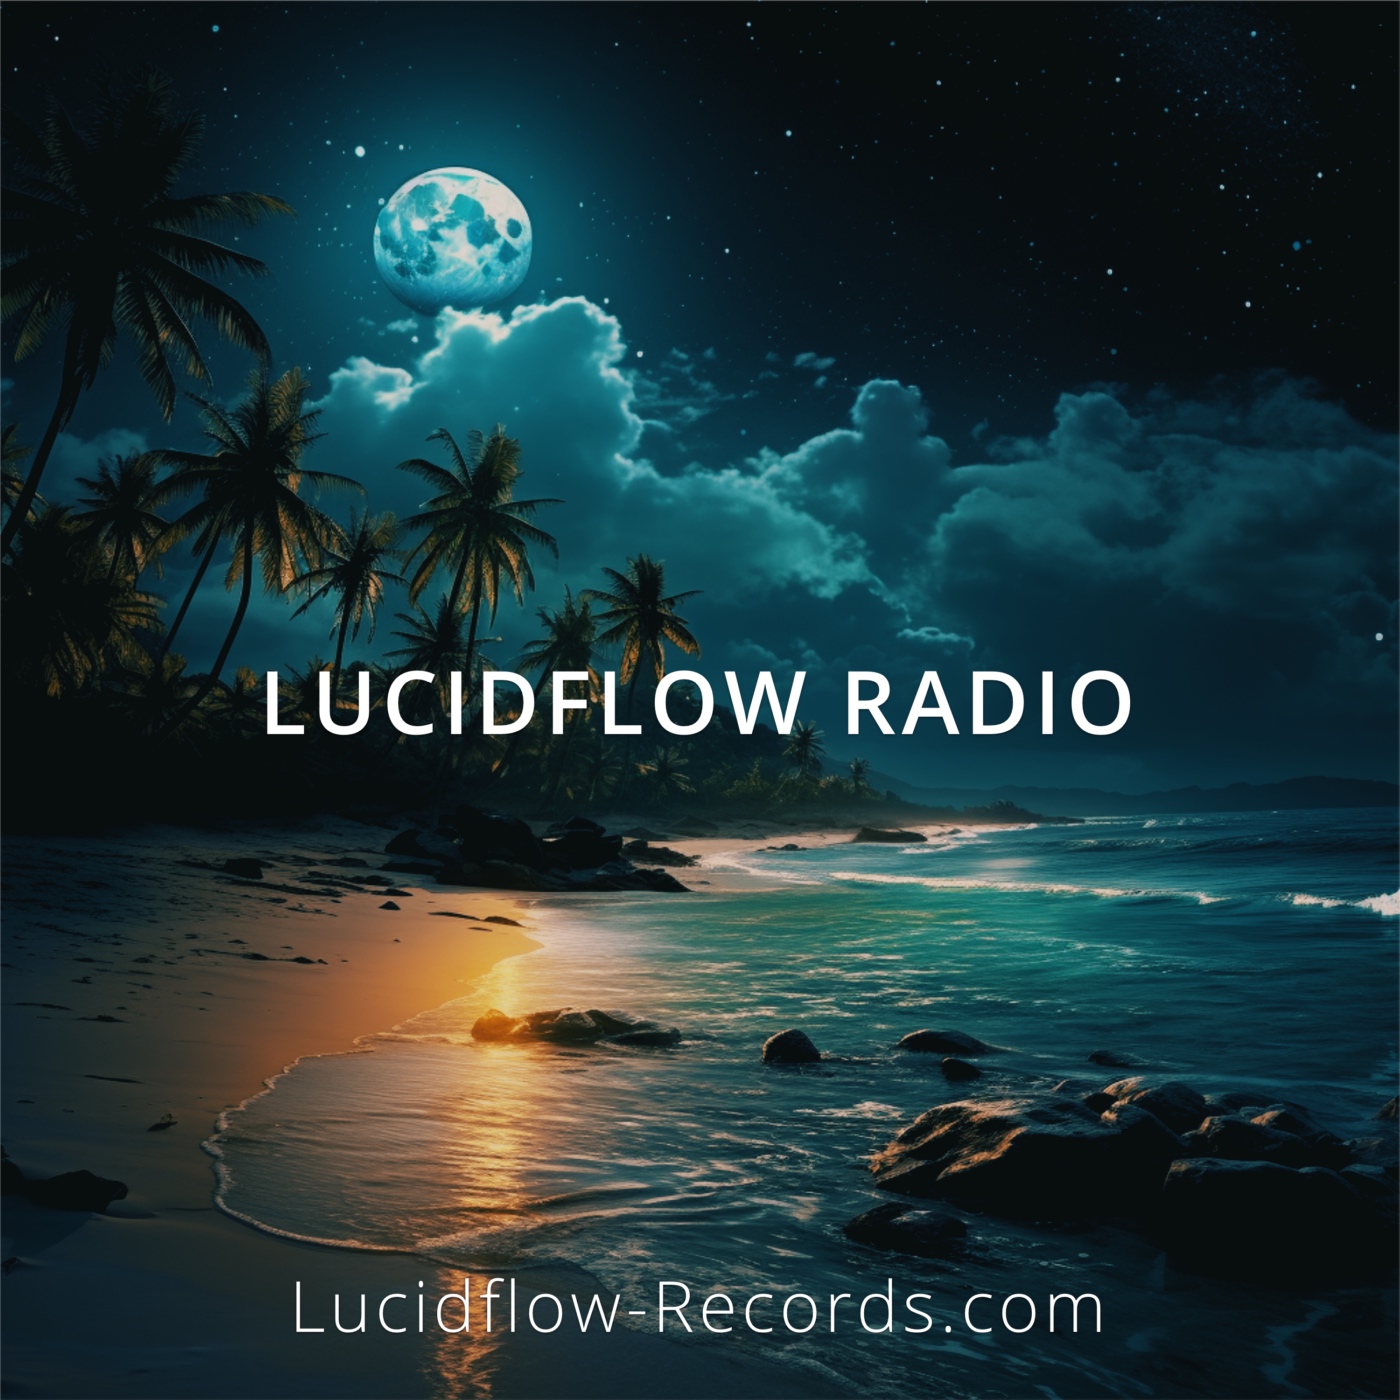 Lucidflow-Records.com - Lucidflow Radio